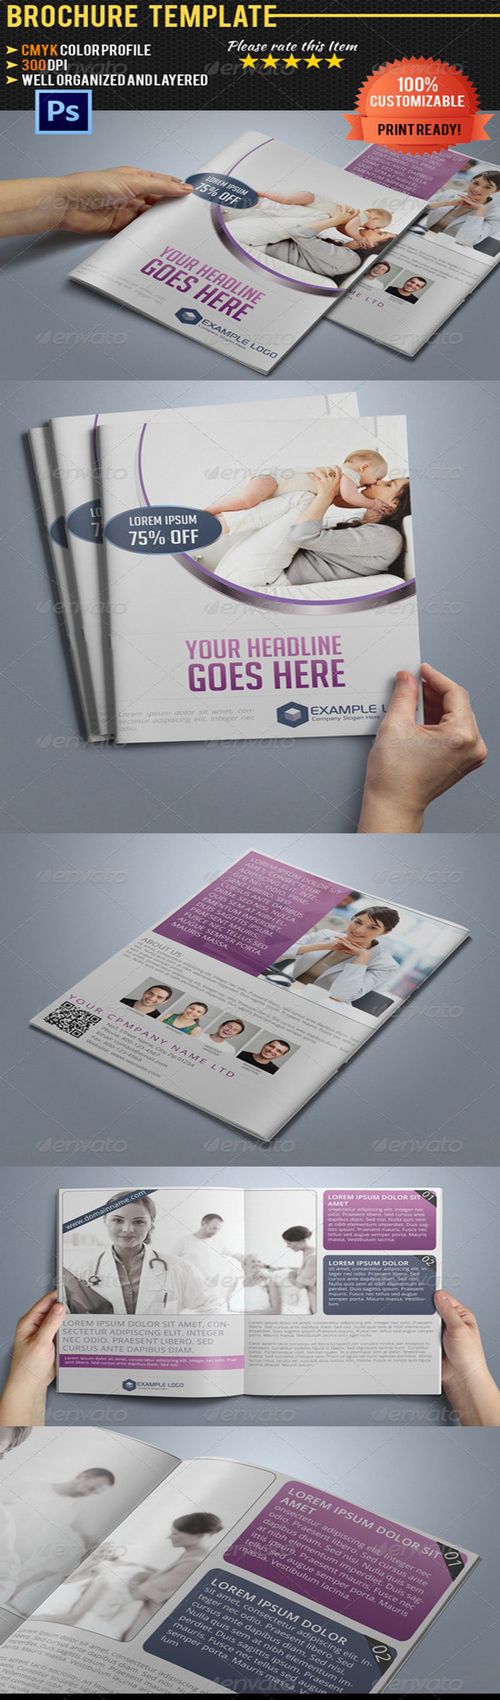 PSD - GraphicRiver Multipurpose Bi-Fold Business Brochure Vol.3